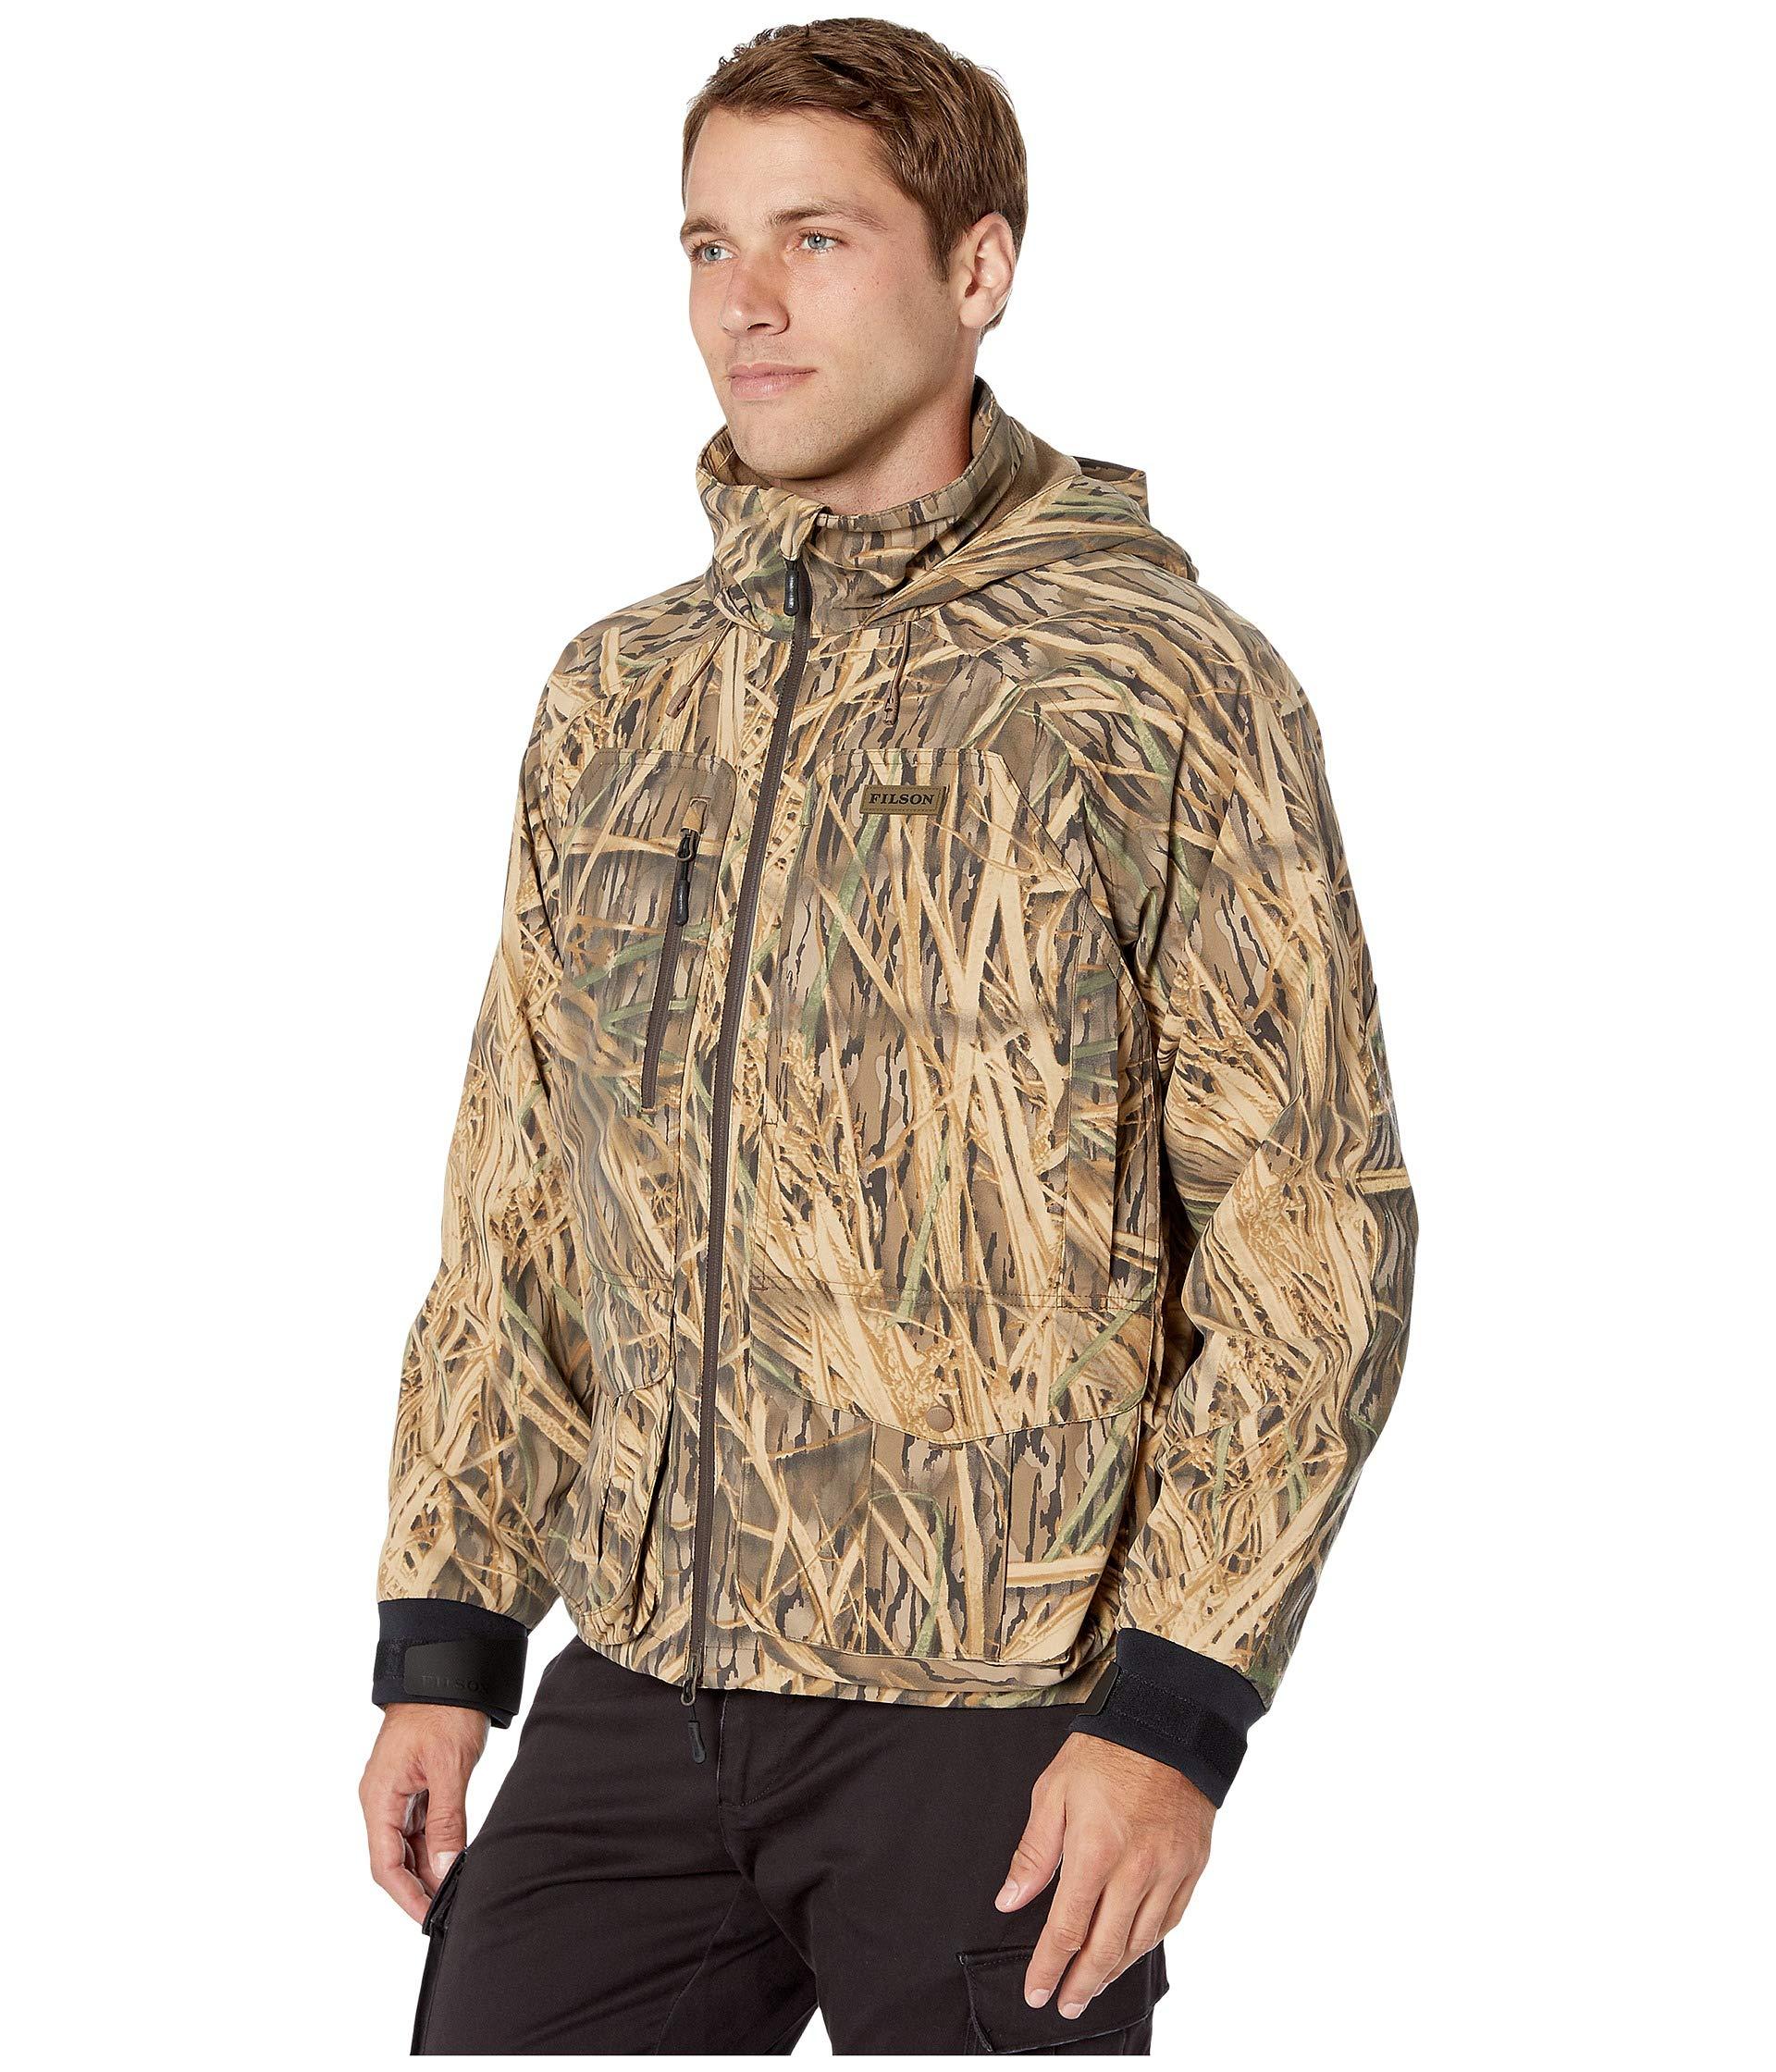 Filson Cotton Skagit Waterfowl Jacket in Brown for Men - Lyst